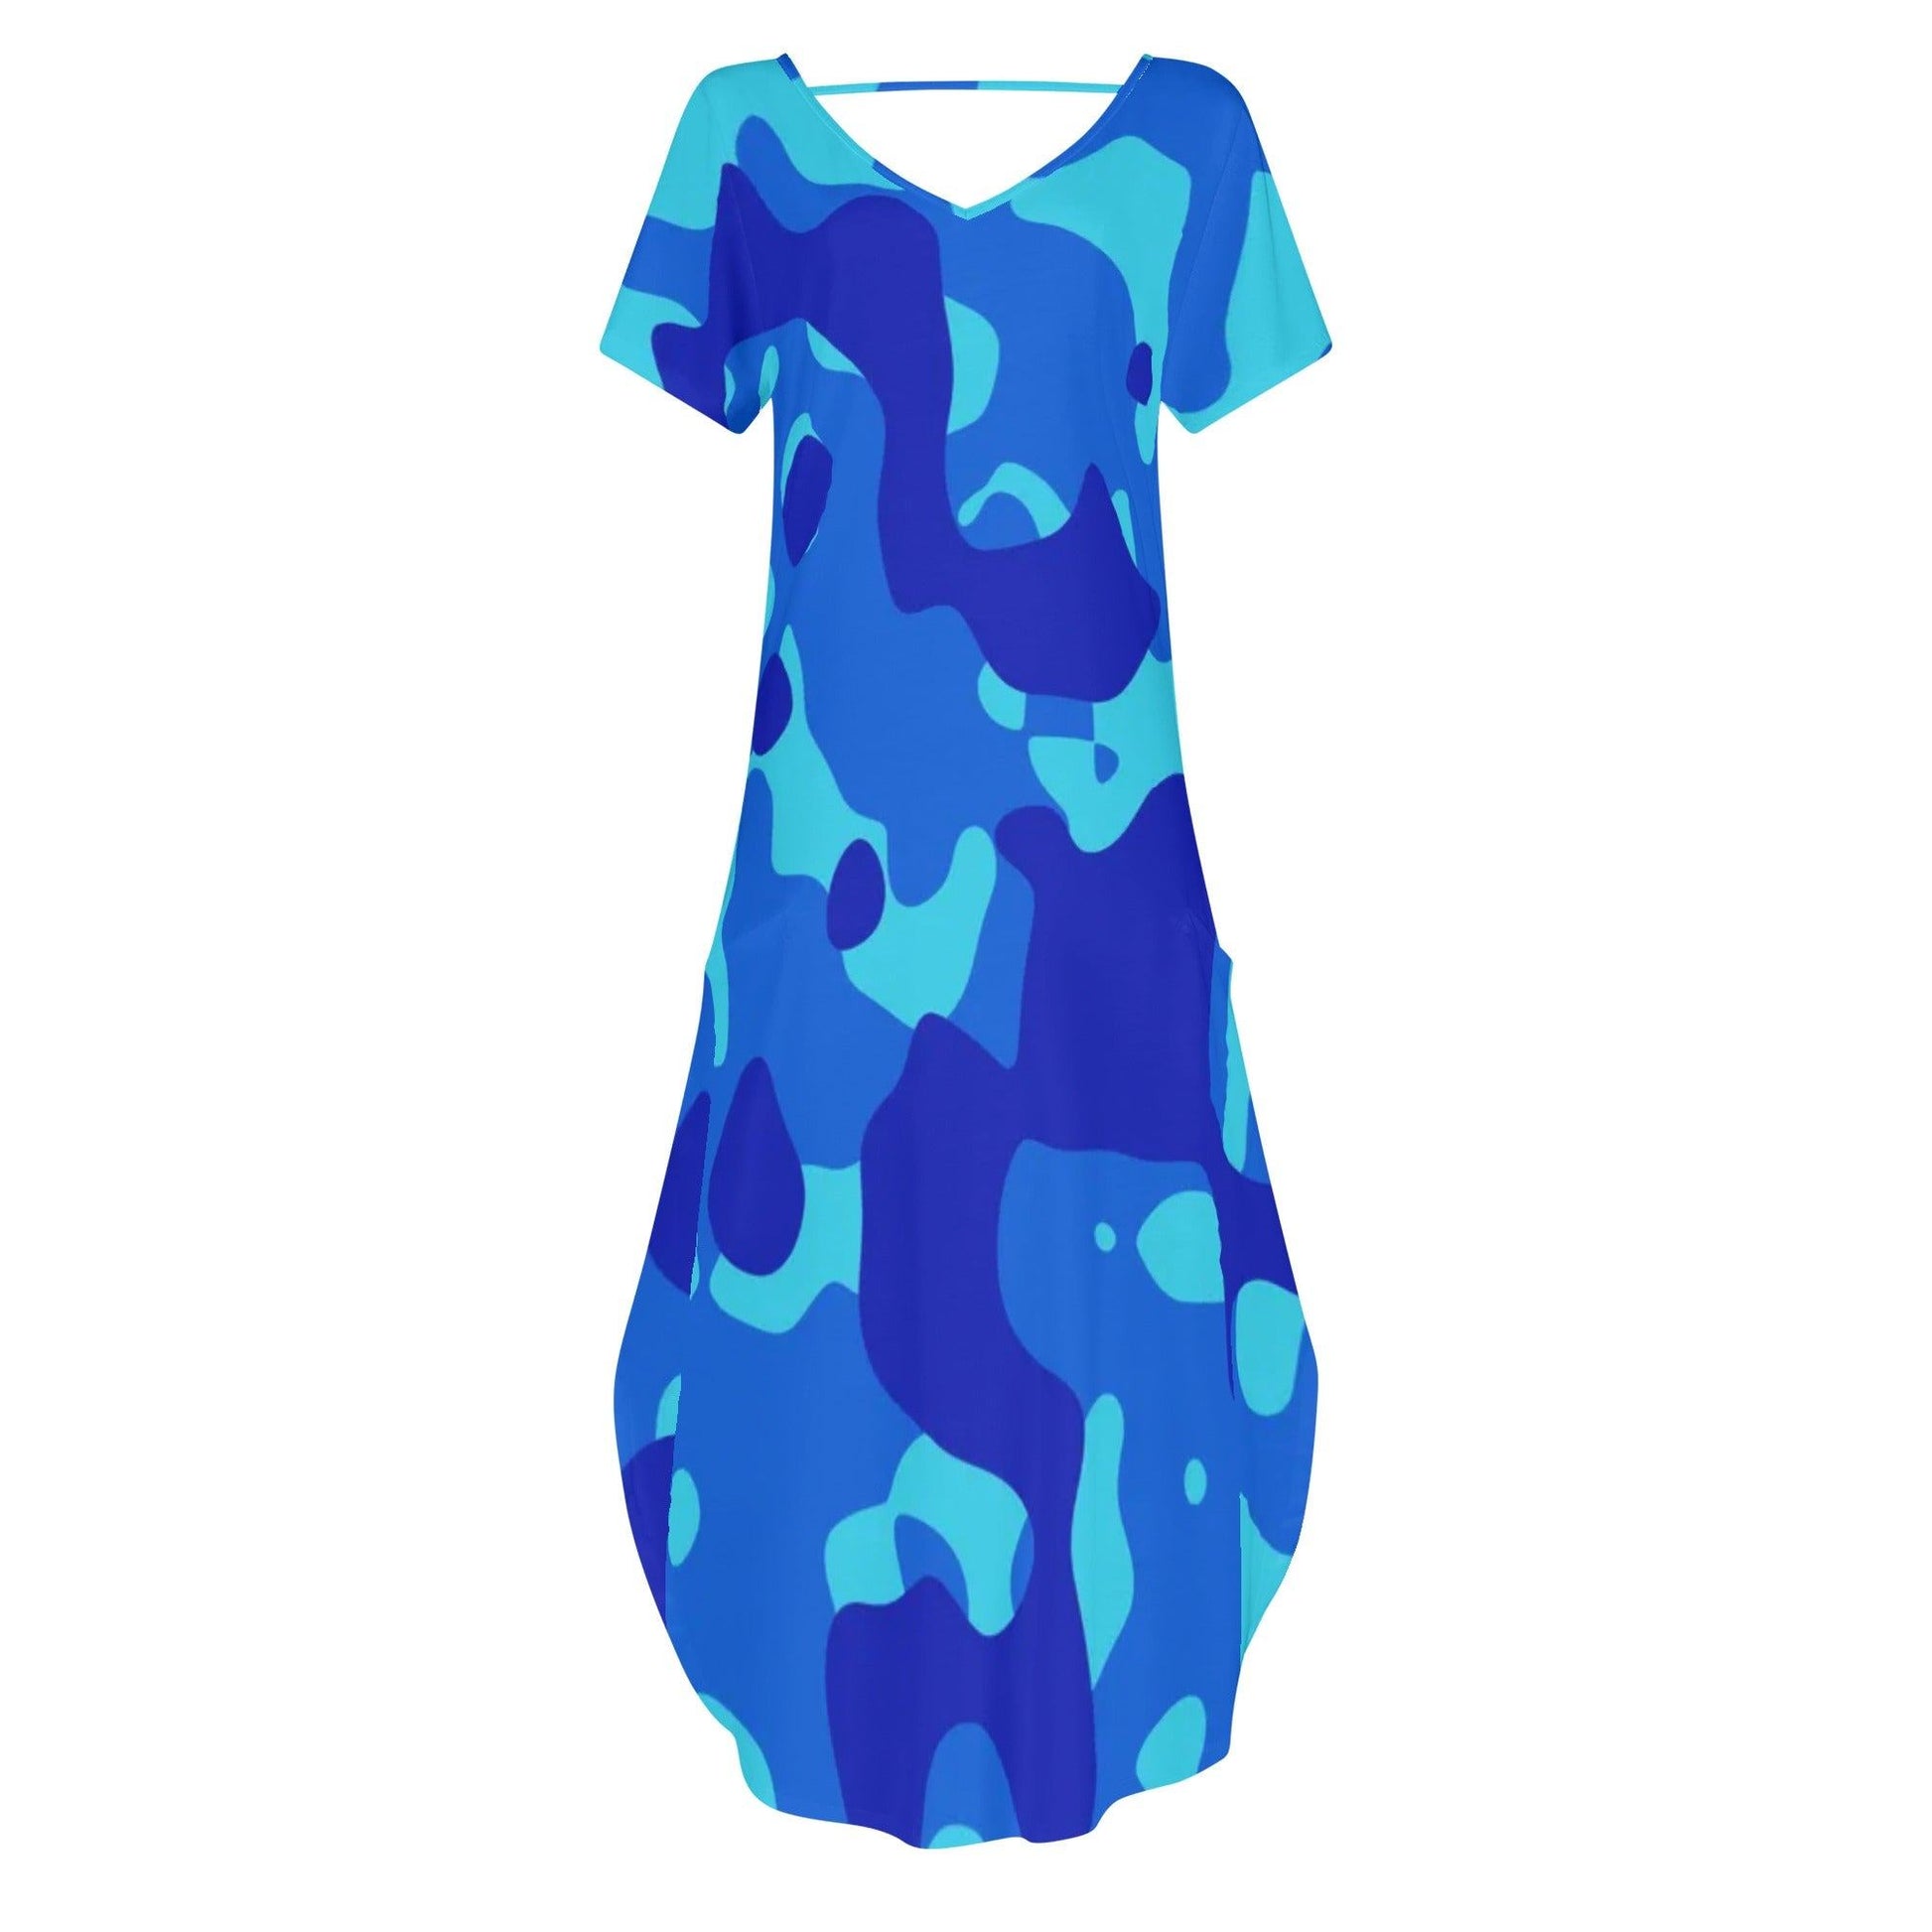 Blue Camouflage kurzärmliges drapiertes Kleid drapiertes Kleid 63.99 Blue, Camouflage, drapiert, kleid, kurzärmlig JLR Design